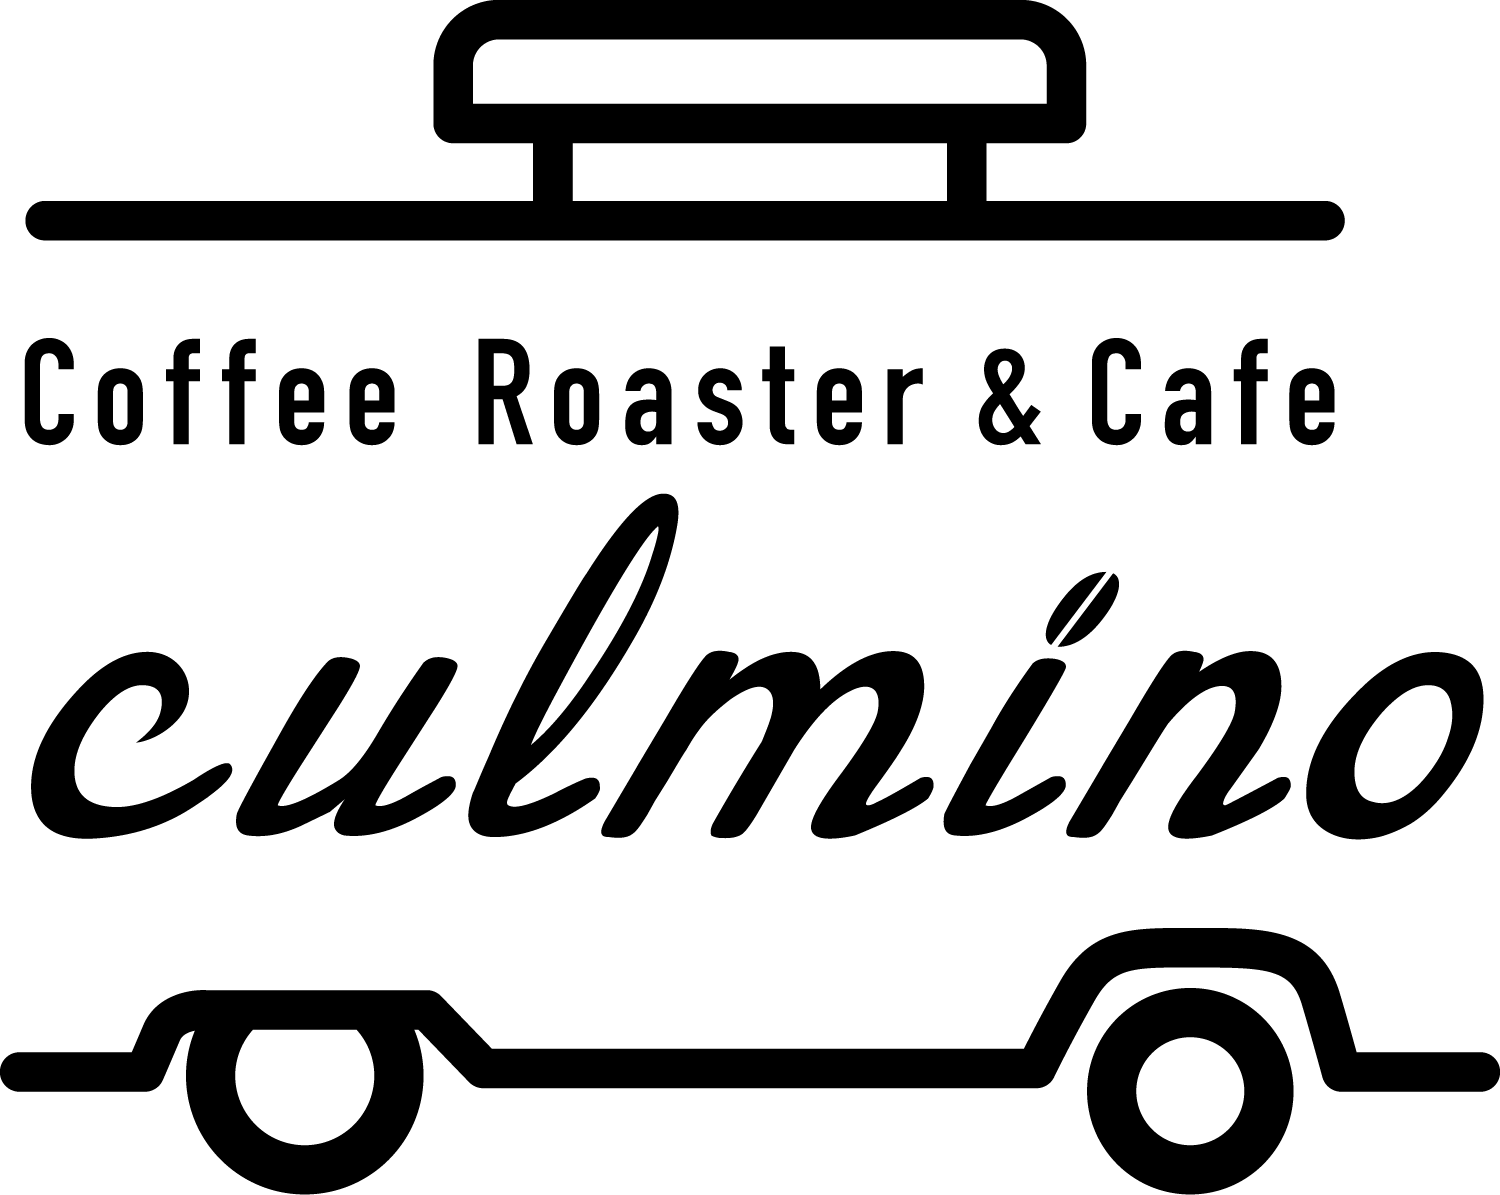 CoffeeRoaster&Cafe culmino　ｺｰﾋｰﾛｰｽﾀｰｱﾝﾄﾞｶﾌｪ ｸﾙﾐｰﾉ